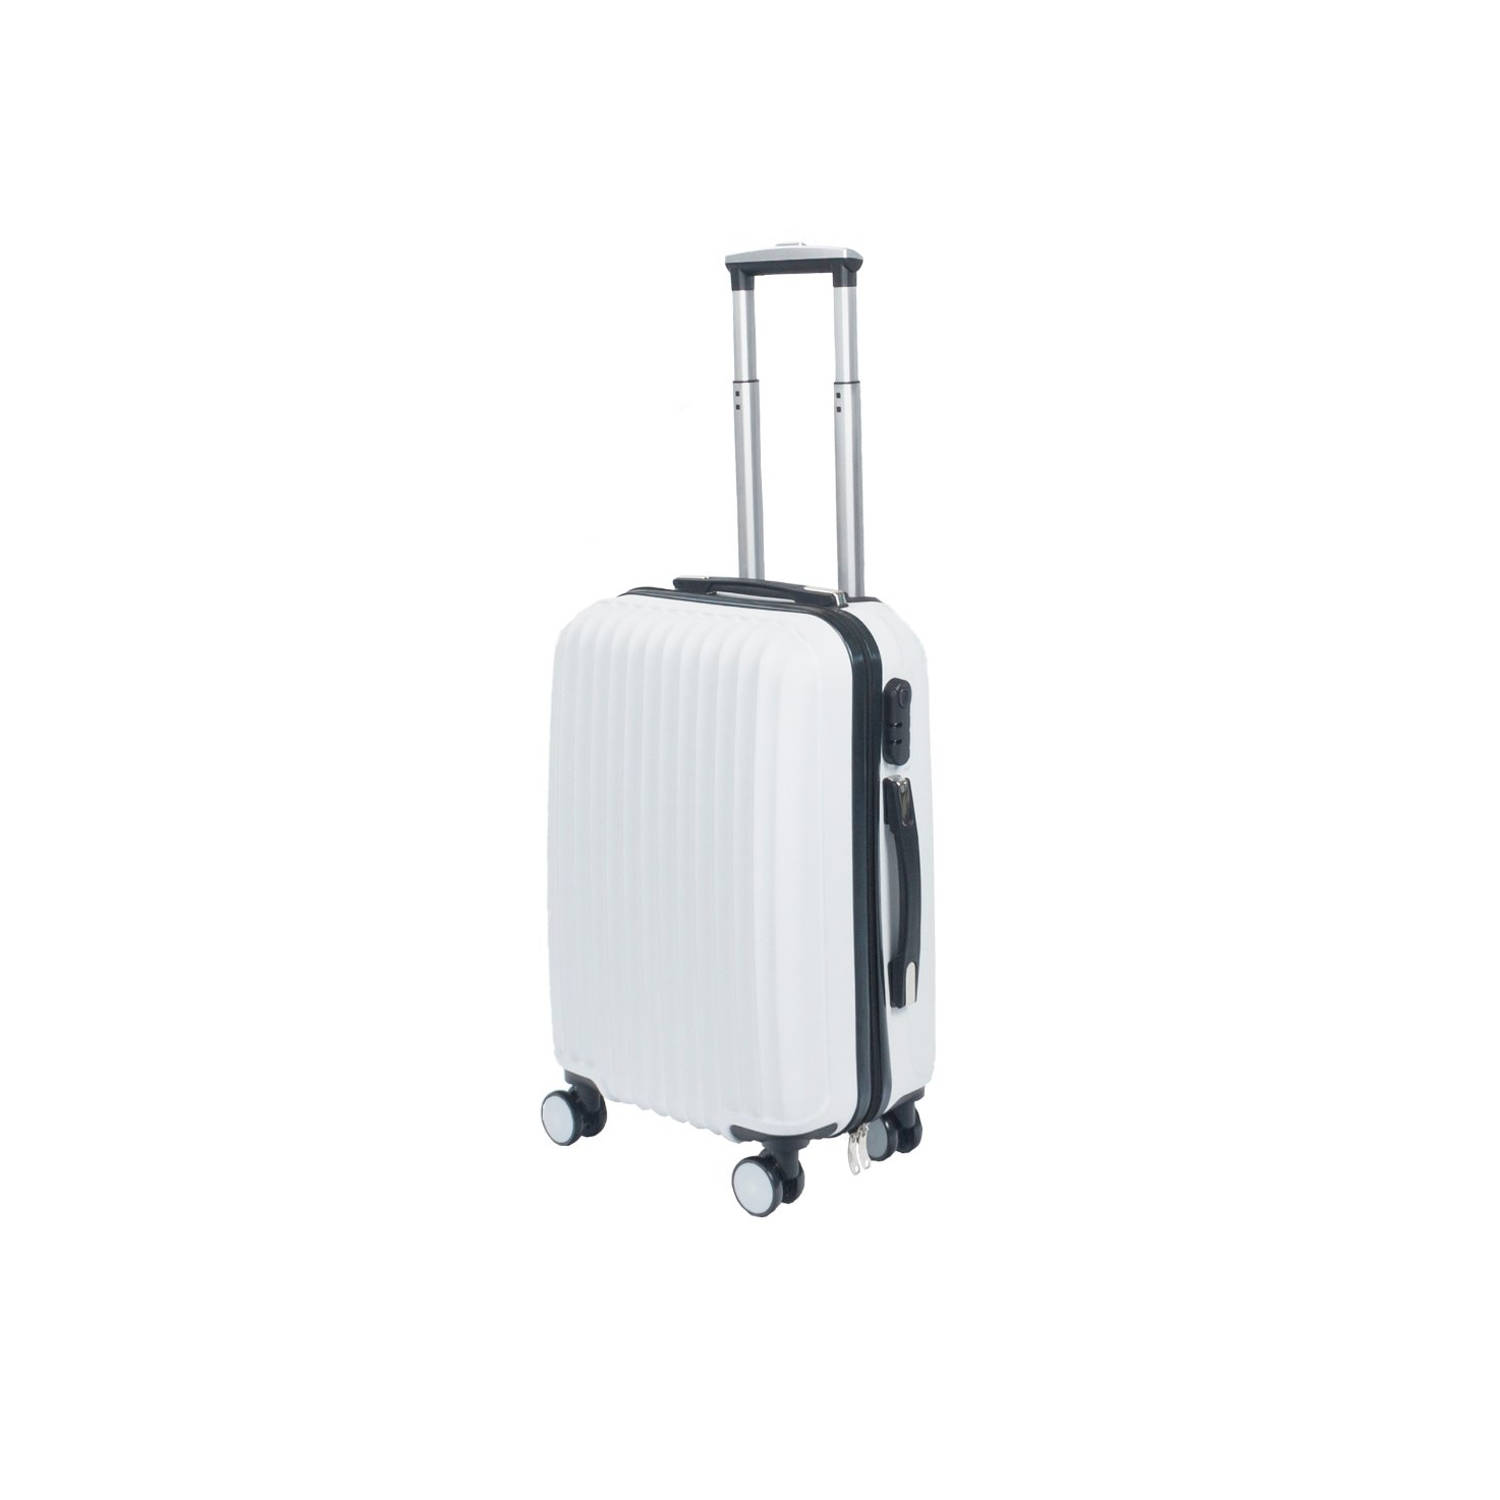 Aap Publiciteit Vooruit Handbagage koffer 55cm wit 4 wielen trolley met pin slot | Blokker